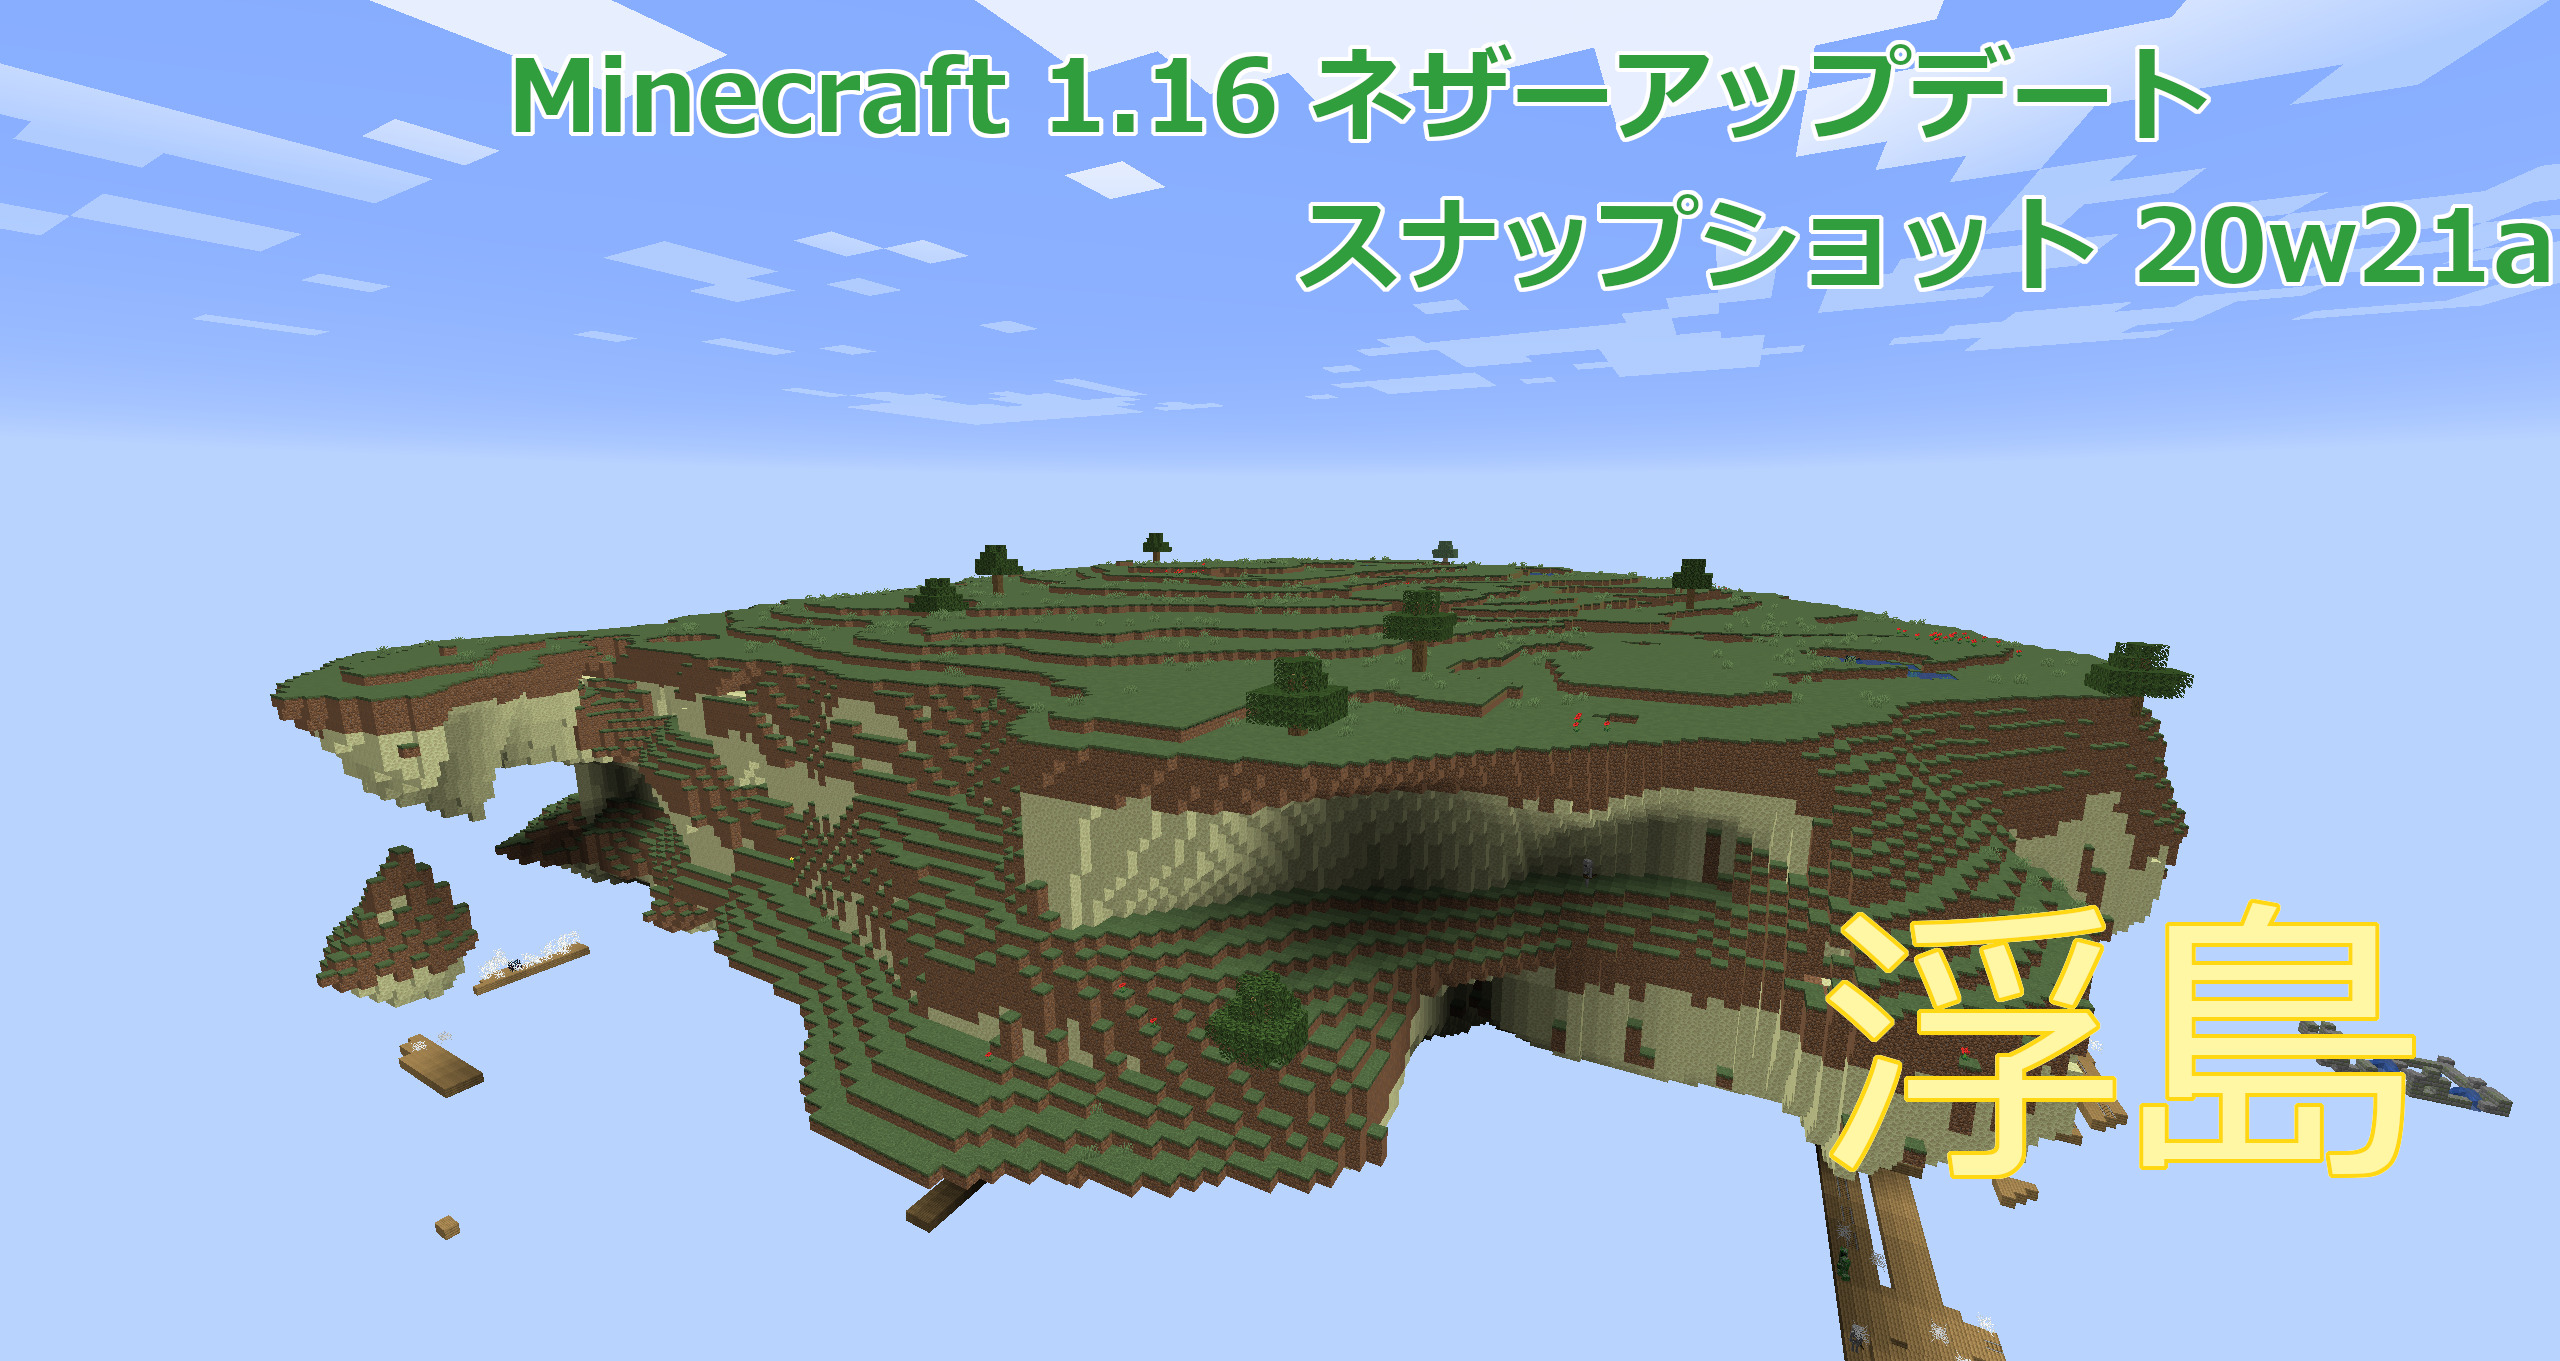 【Java版】Minecraft 20w21a ネザーアップデートへ向けた18回目のリリース